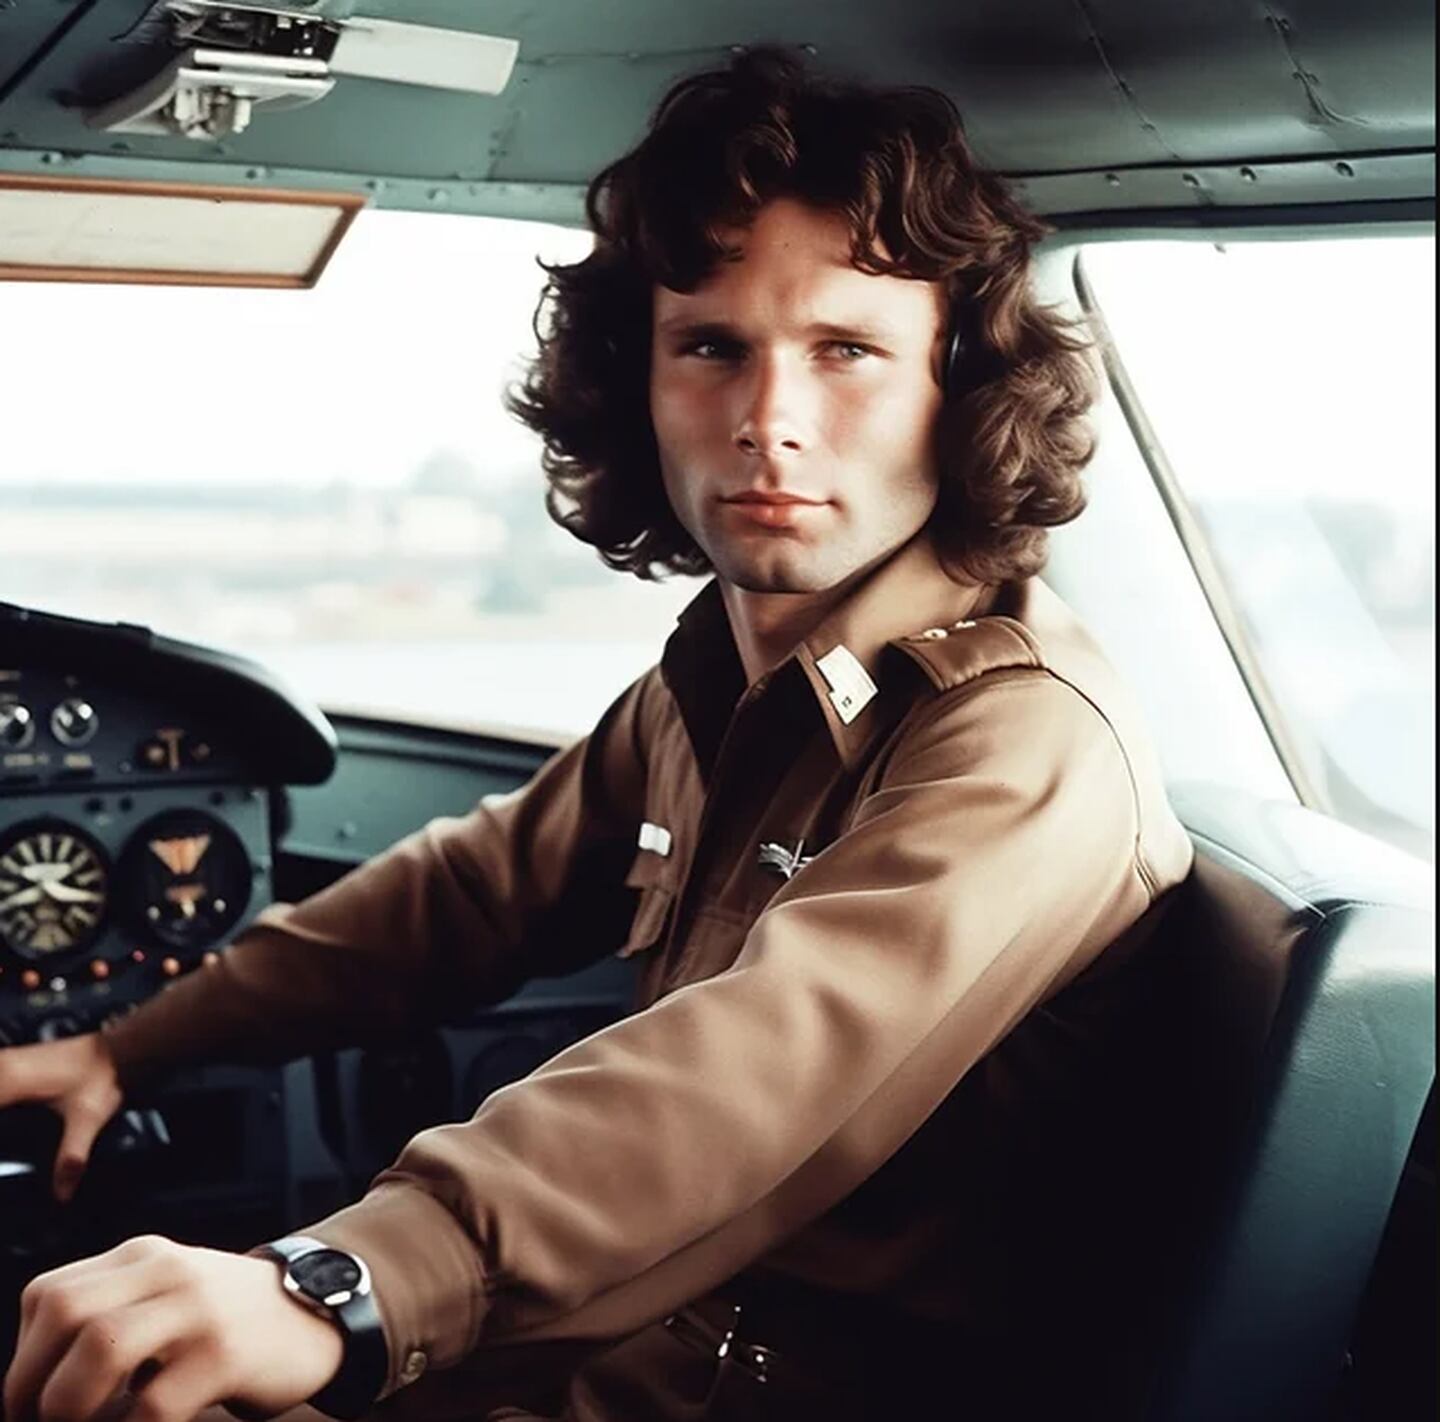 Jim Morrison (líder y vocalista de The Doors), como piloto